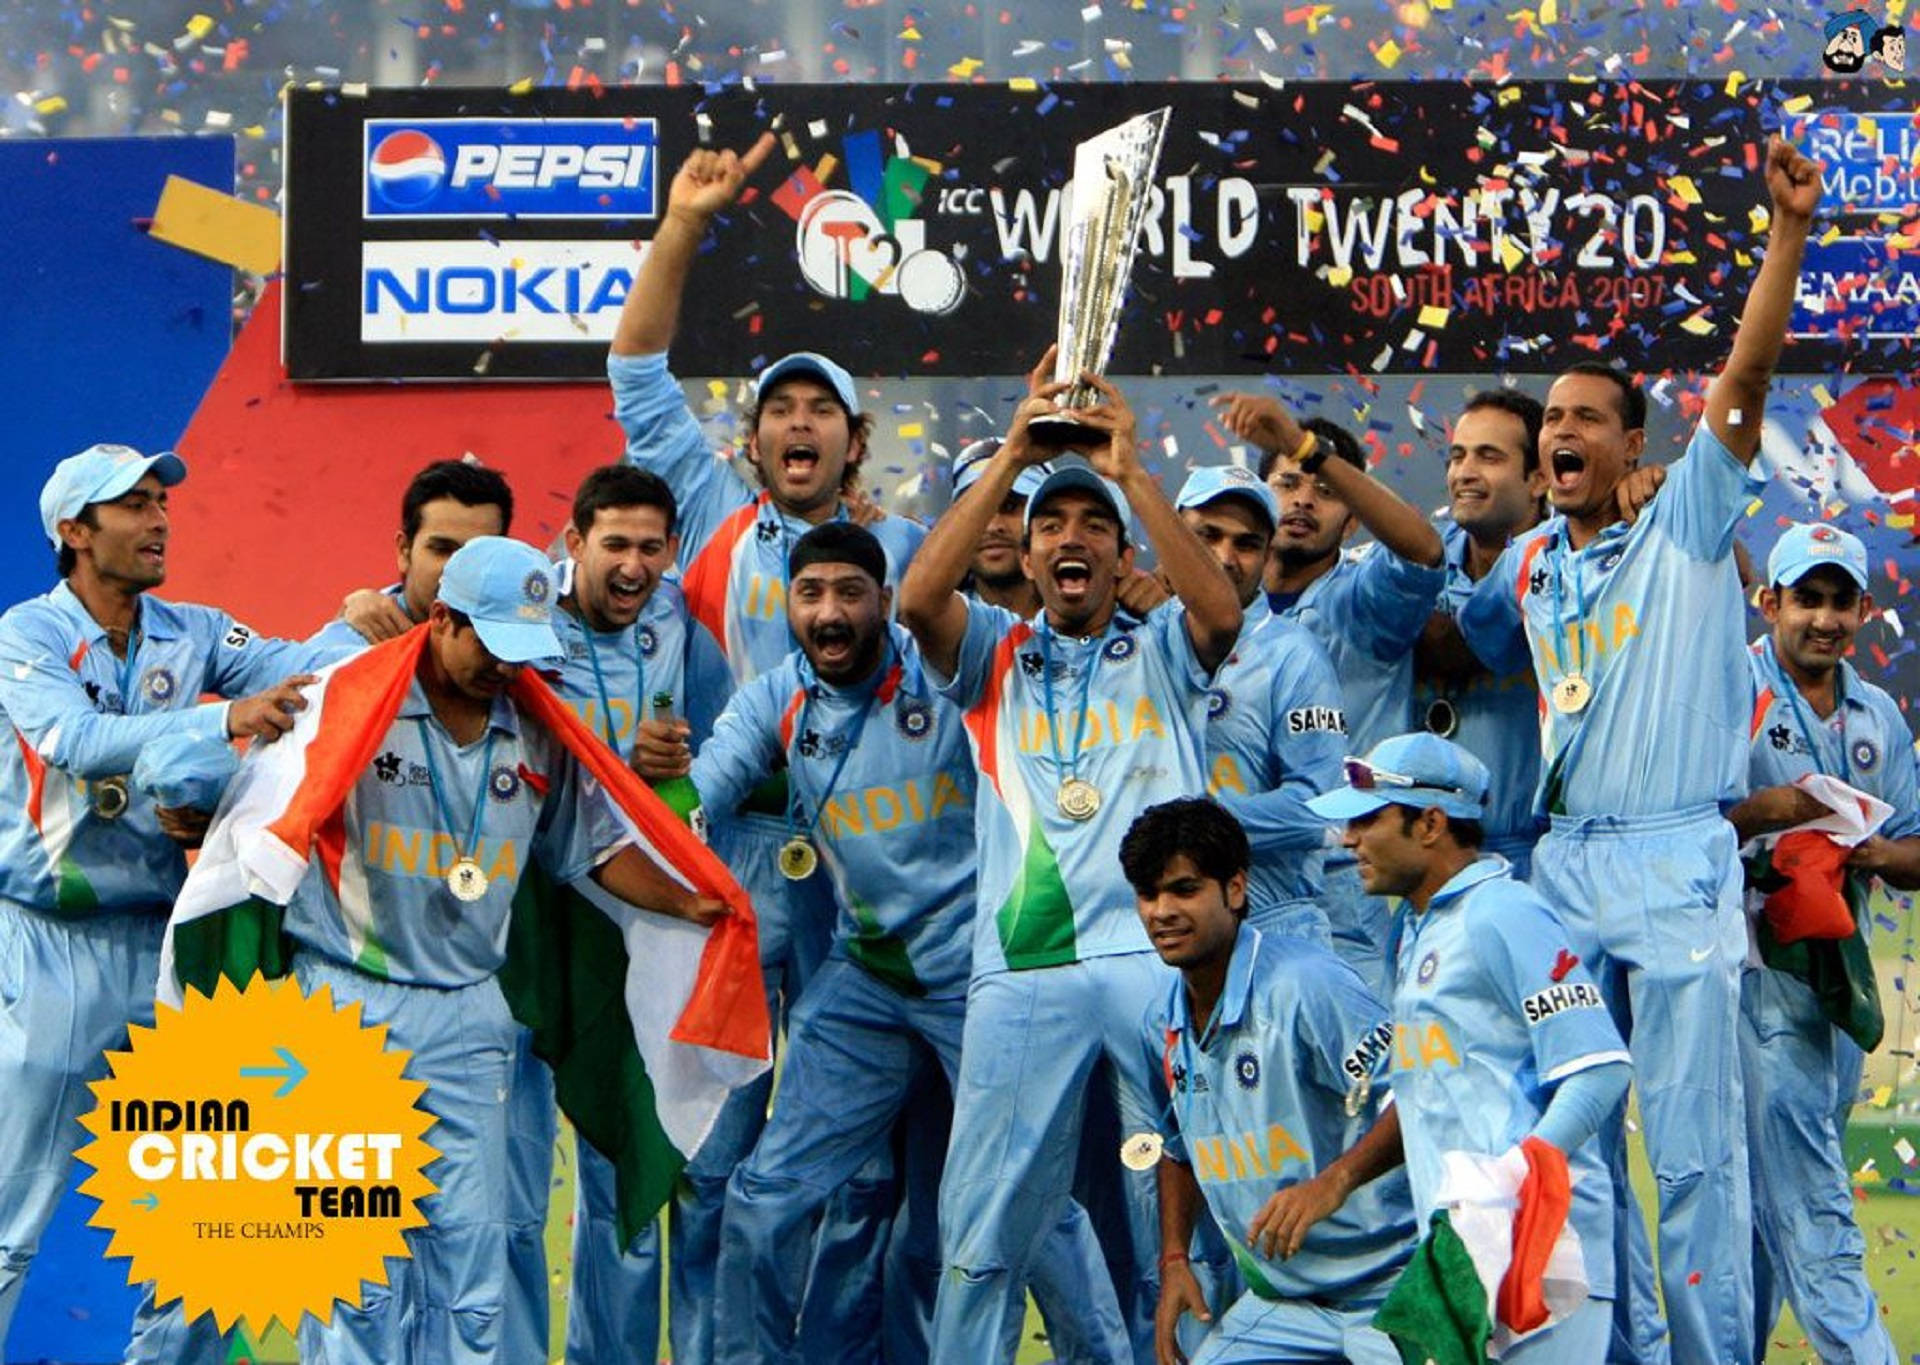 Indian Cricket Championship Celebration Background